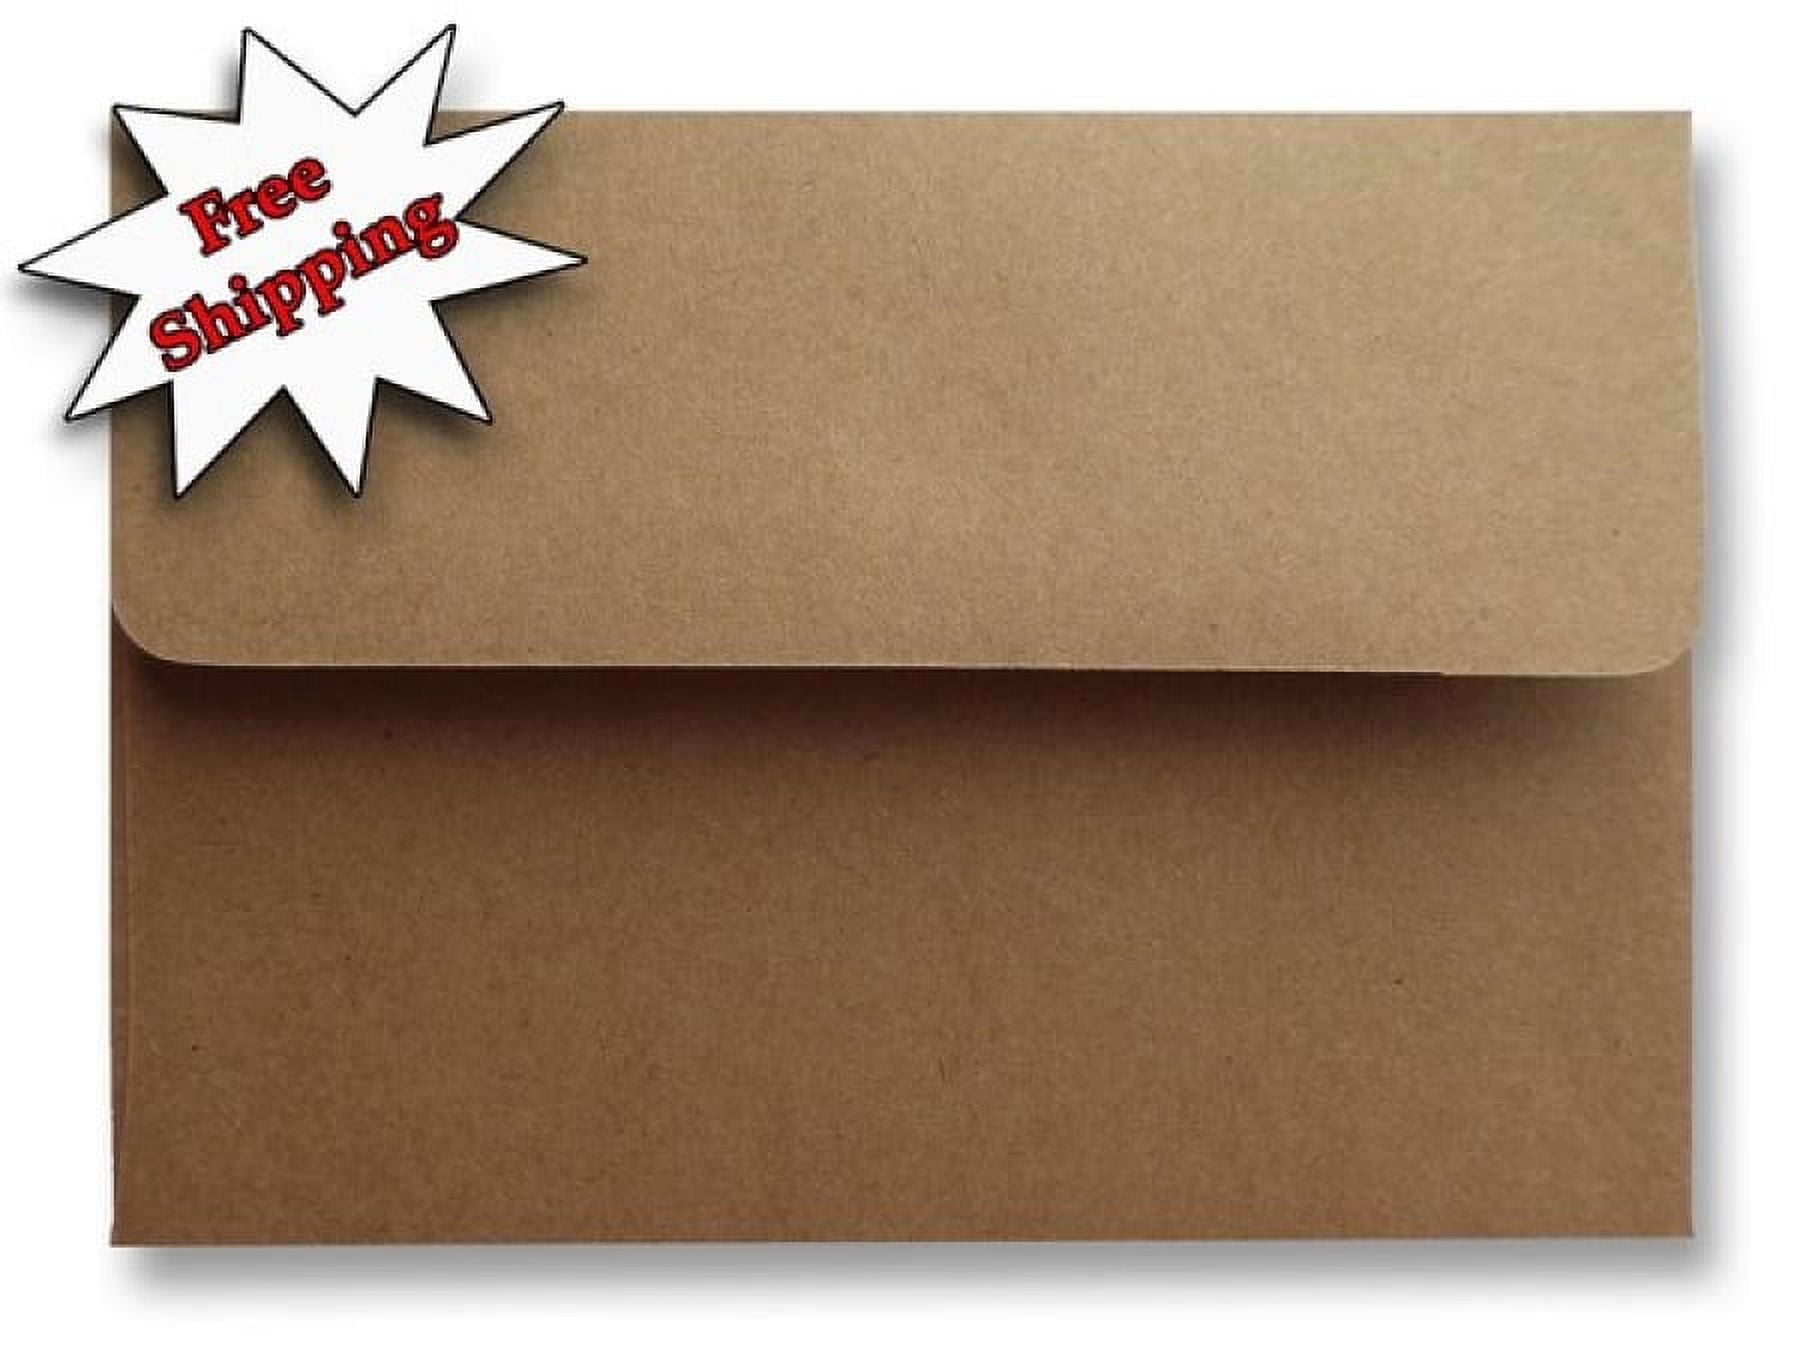 Kraft Paper Invitation Envelopes 4x6 for Wedding, Baby Shower, A6 V-Flap  Brown Envelopes for Thank You Cards (50 Pack)